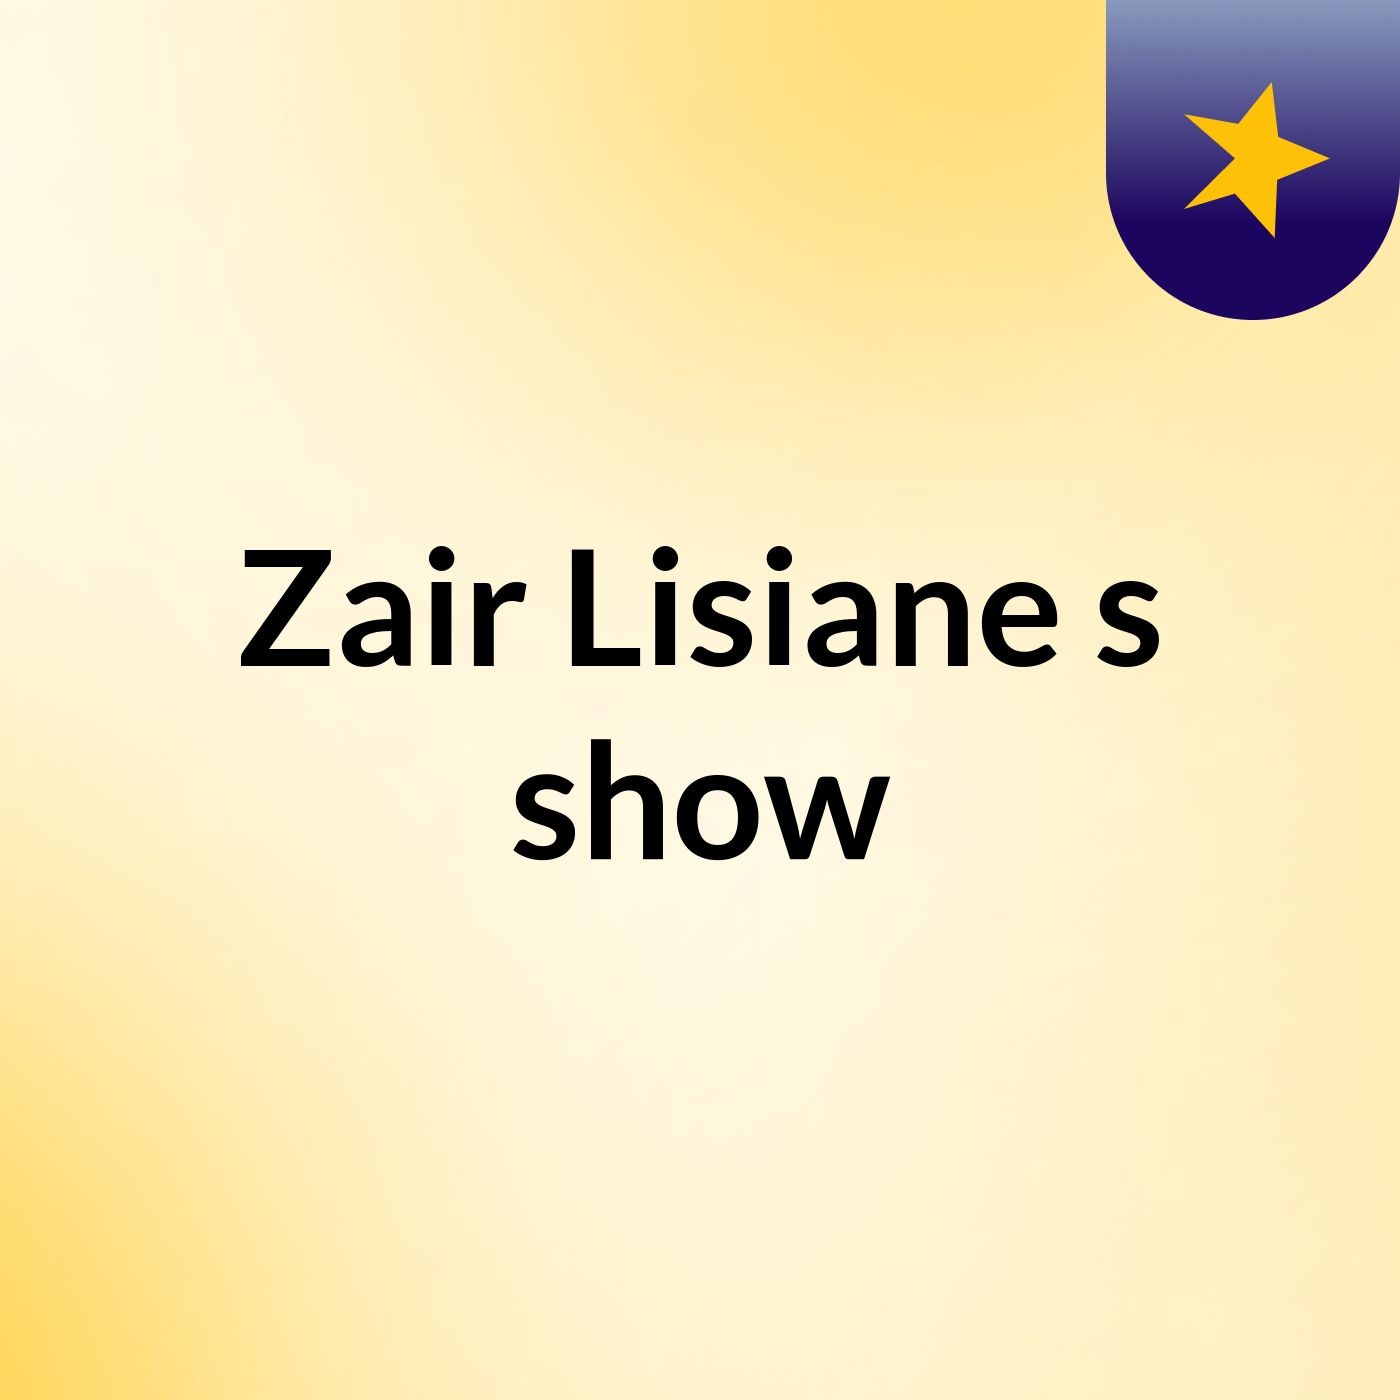 Zair Lisiane's show